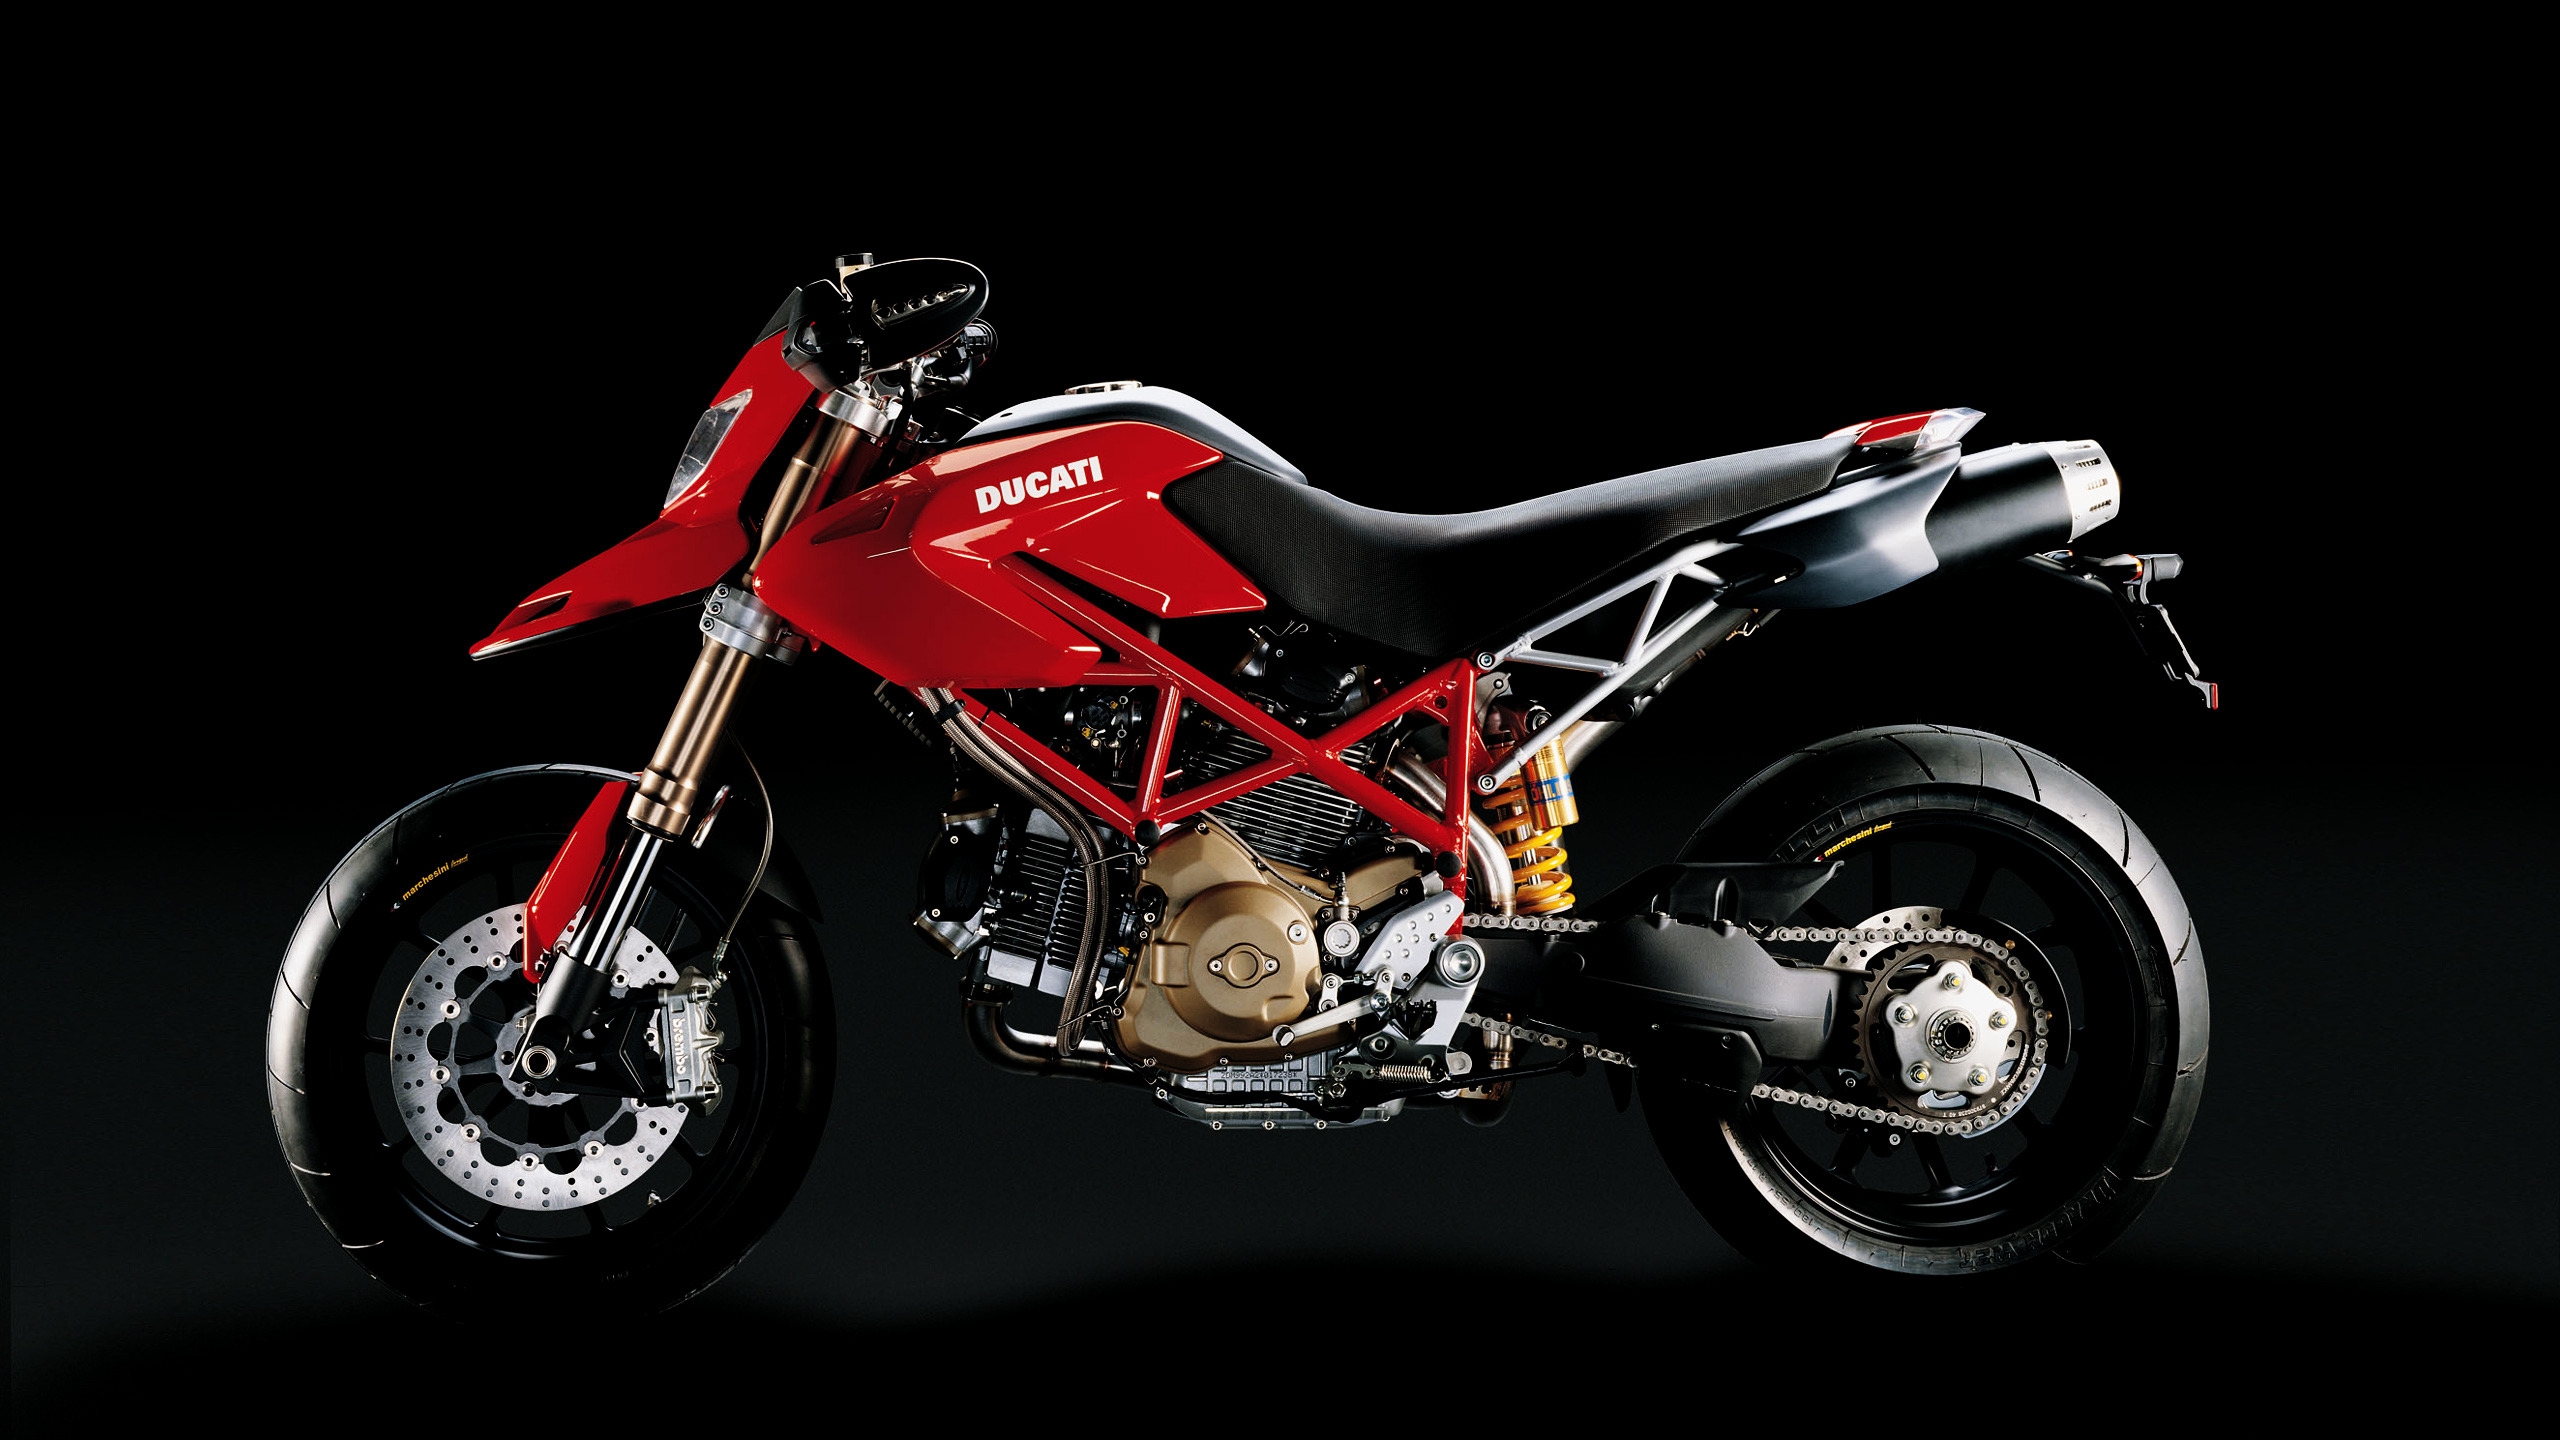 Ducati Hypermotard for 2560x1440 HDTV resolution